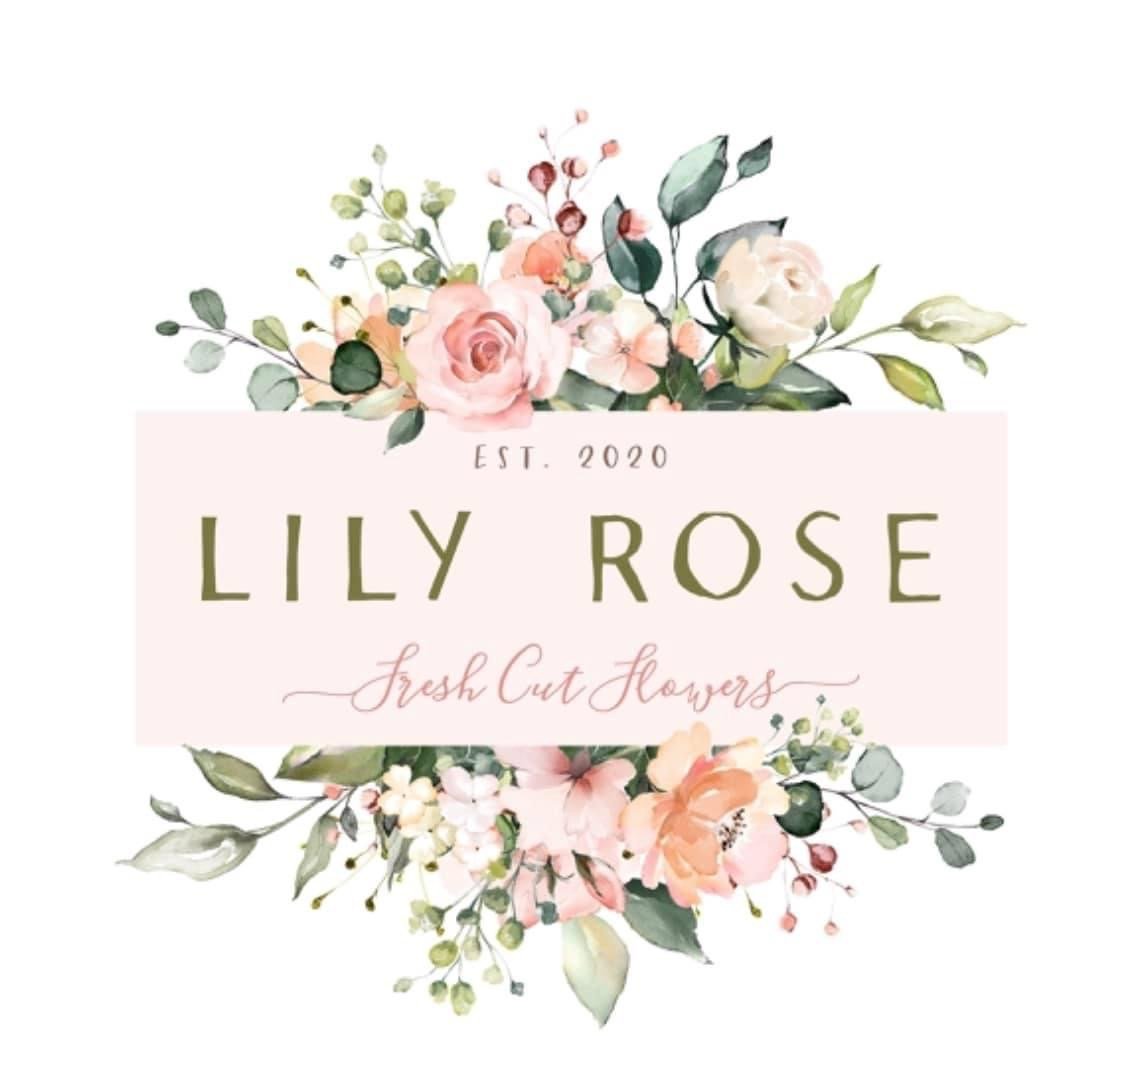 Lily Rose Fresh Cut Flowers